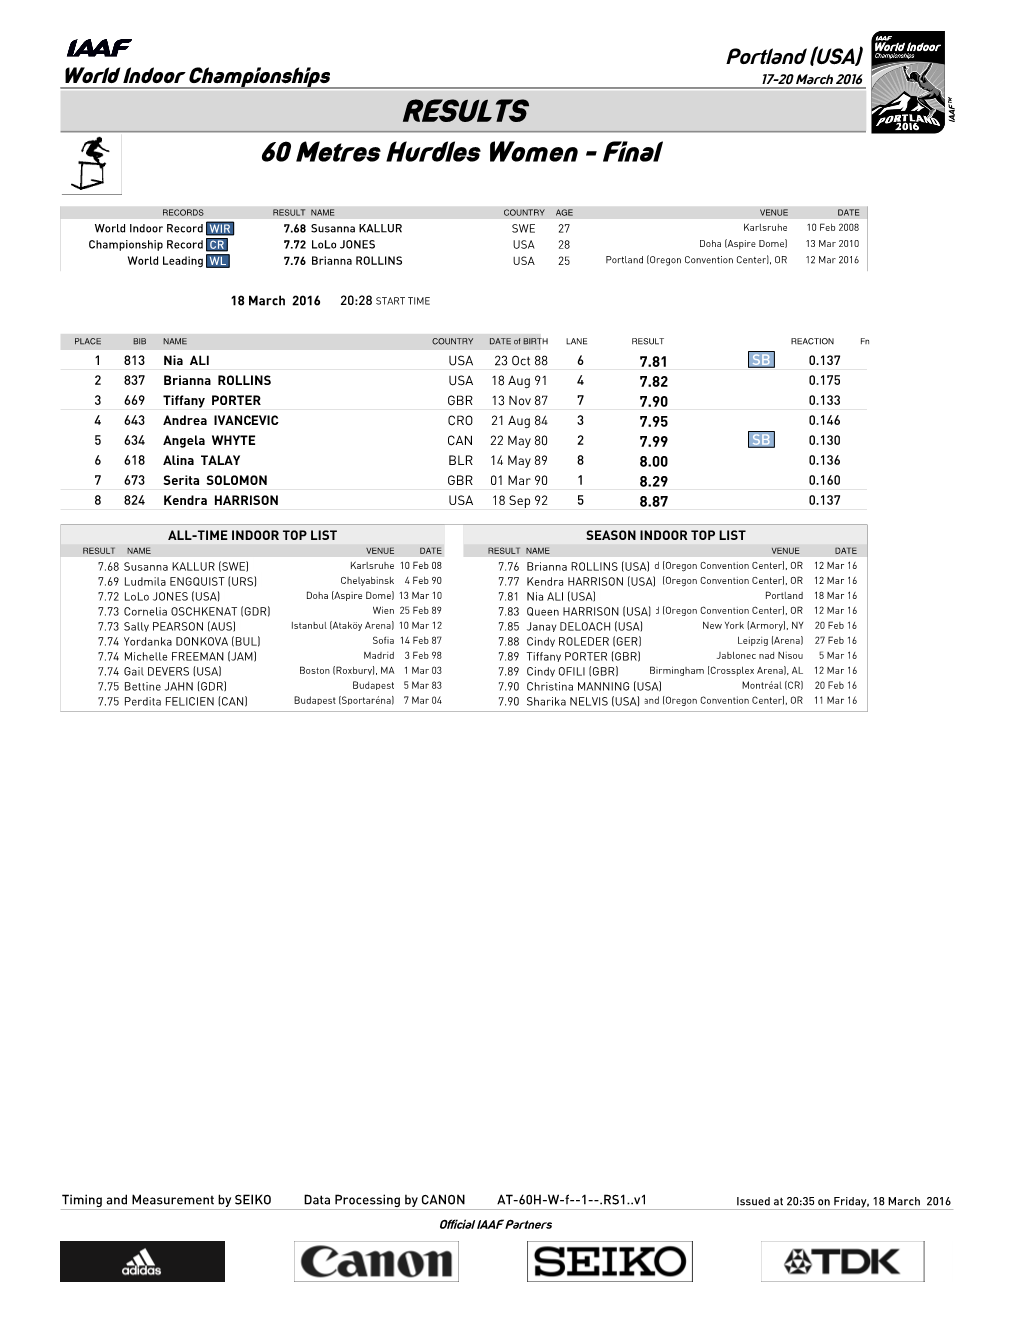 RESULTS 60 Metres Hurdles Women - Final